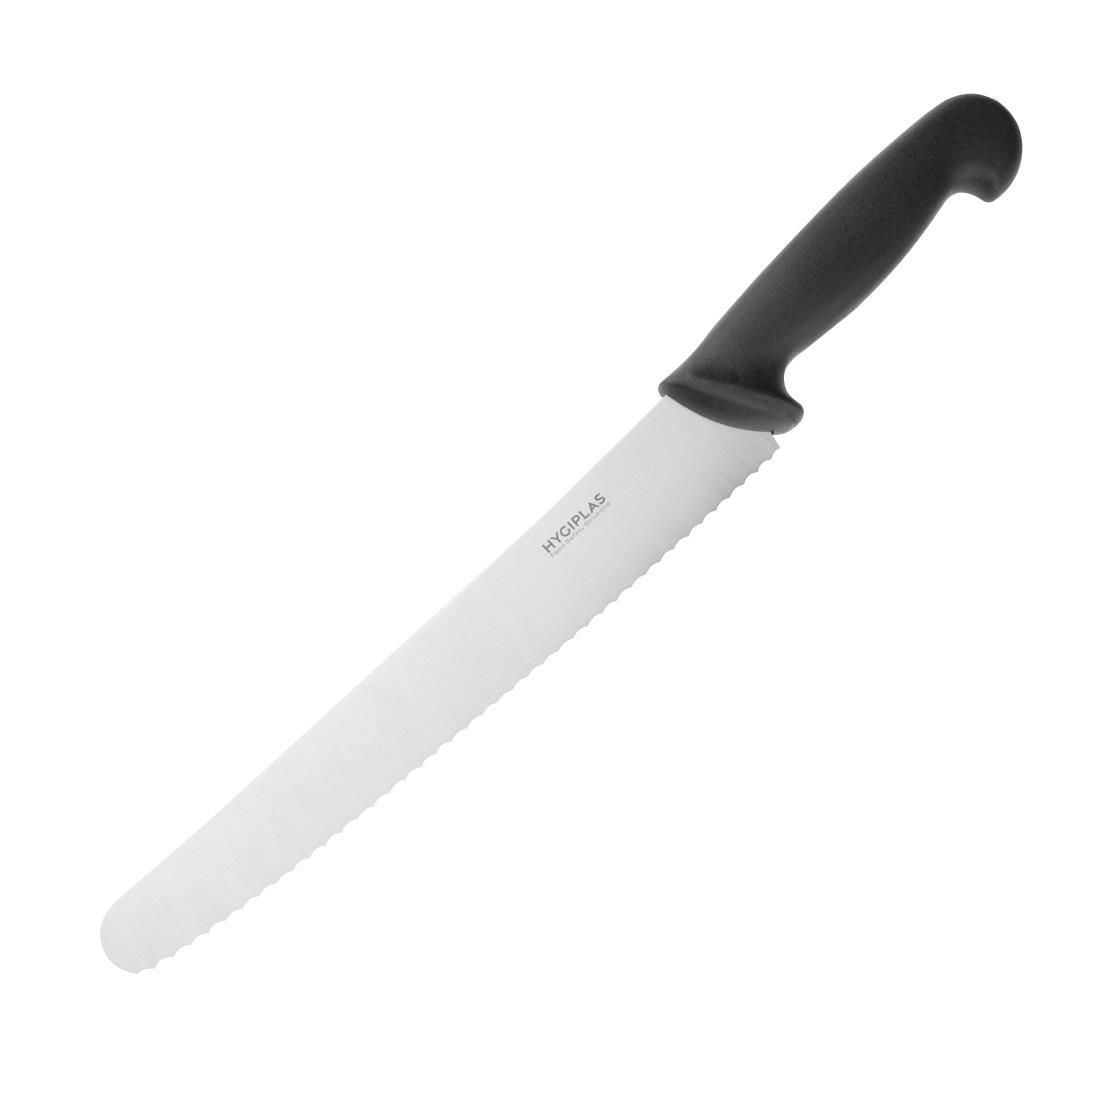 Hygiplas Serrated Pastry Knife Black 25.5cm - CF895  - 1